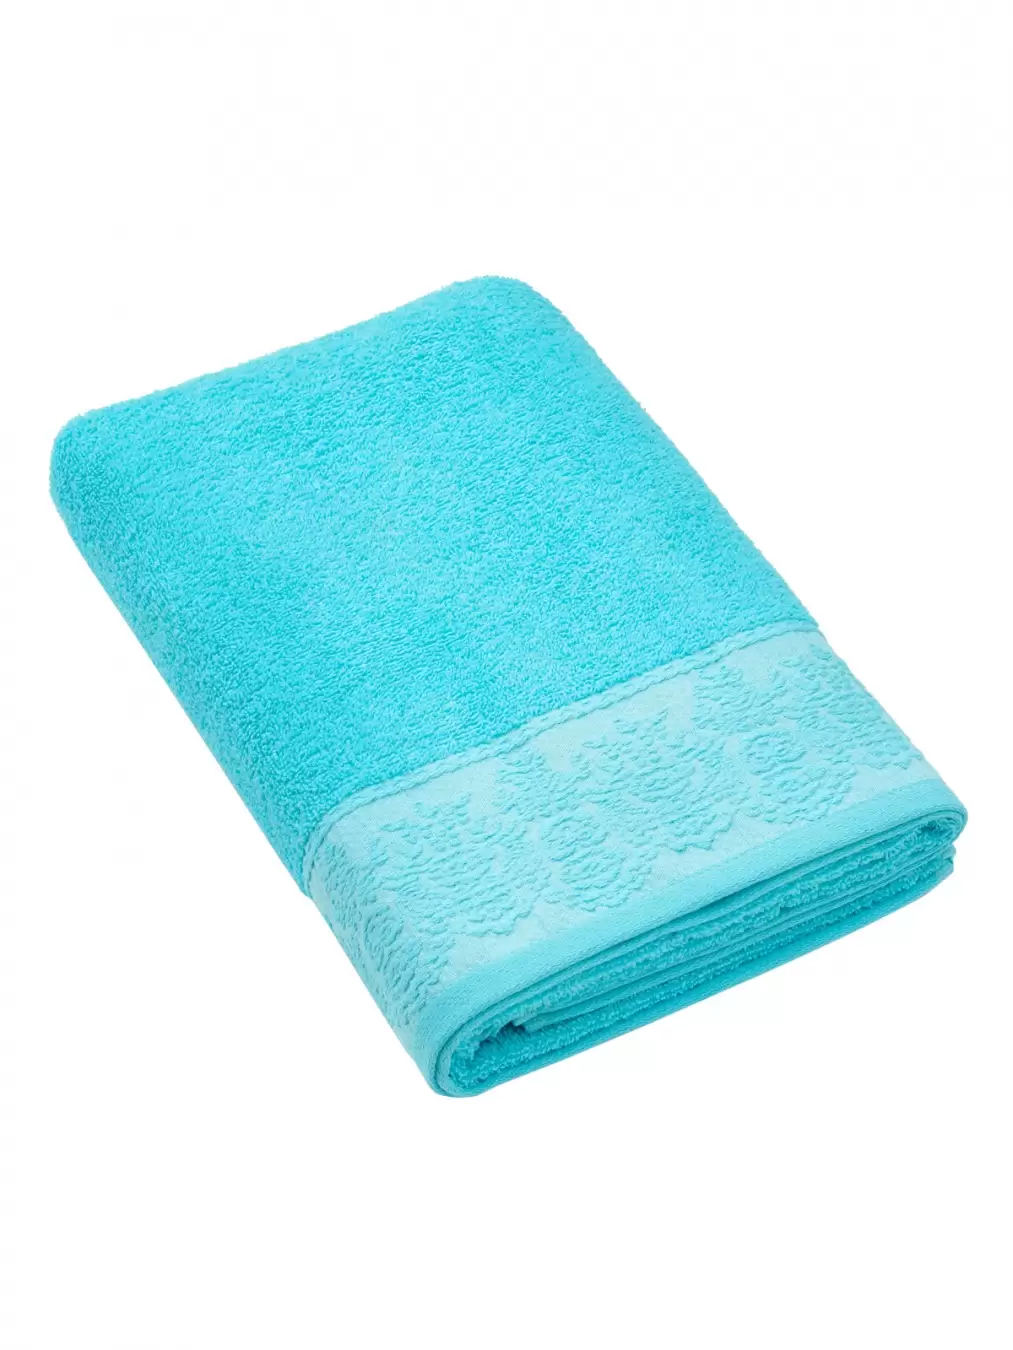 Brielle GARDEN BLUE, 70x140 полотенце (изображение 1)